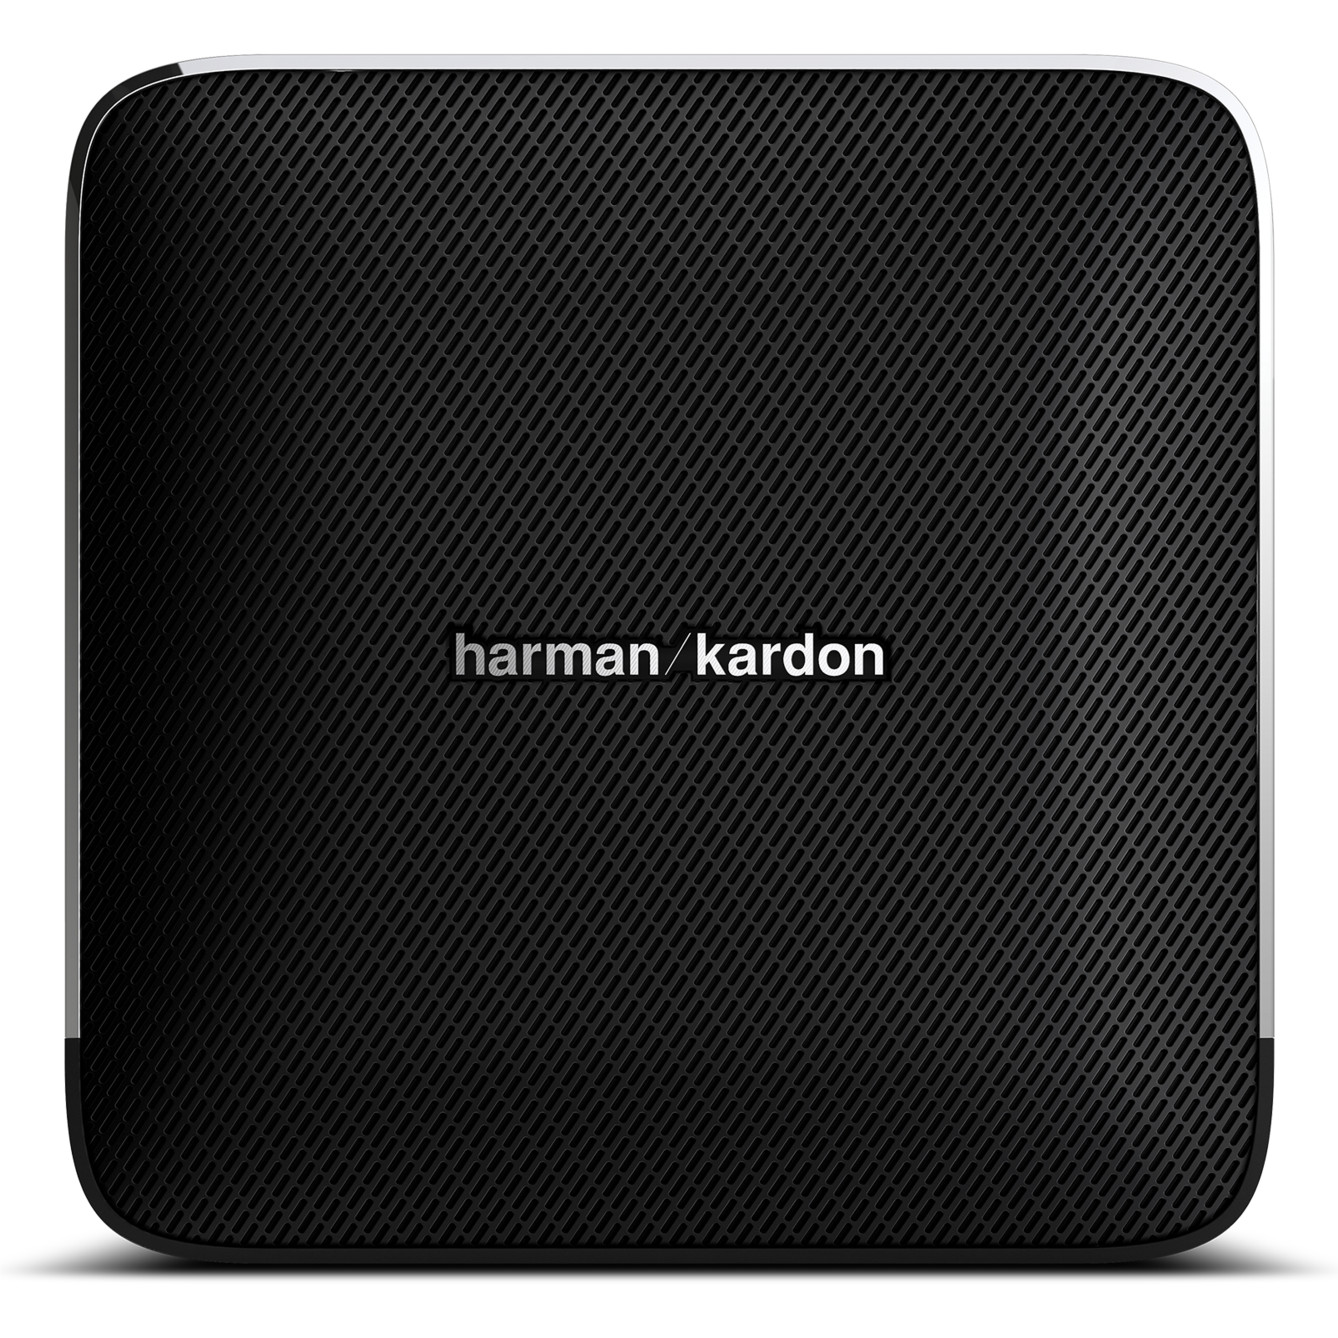  Boxa portabila wireless Harman Kardon HKESQUIREBLKEU, Negru 